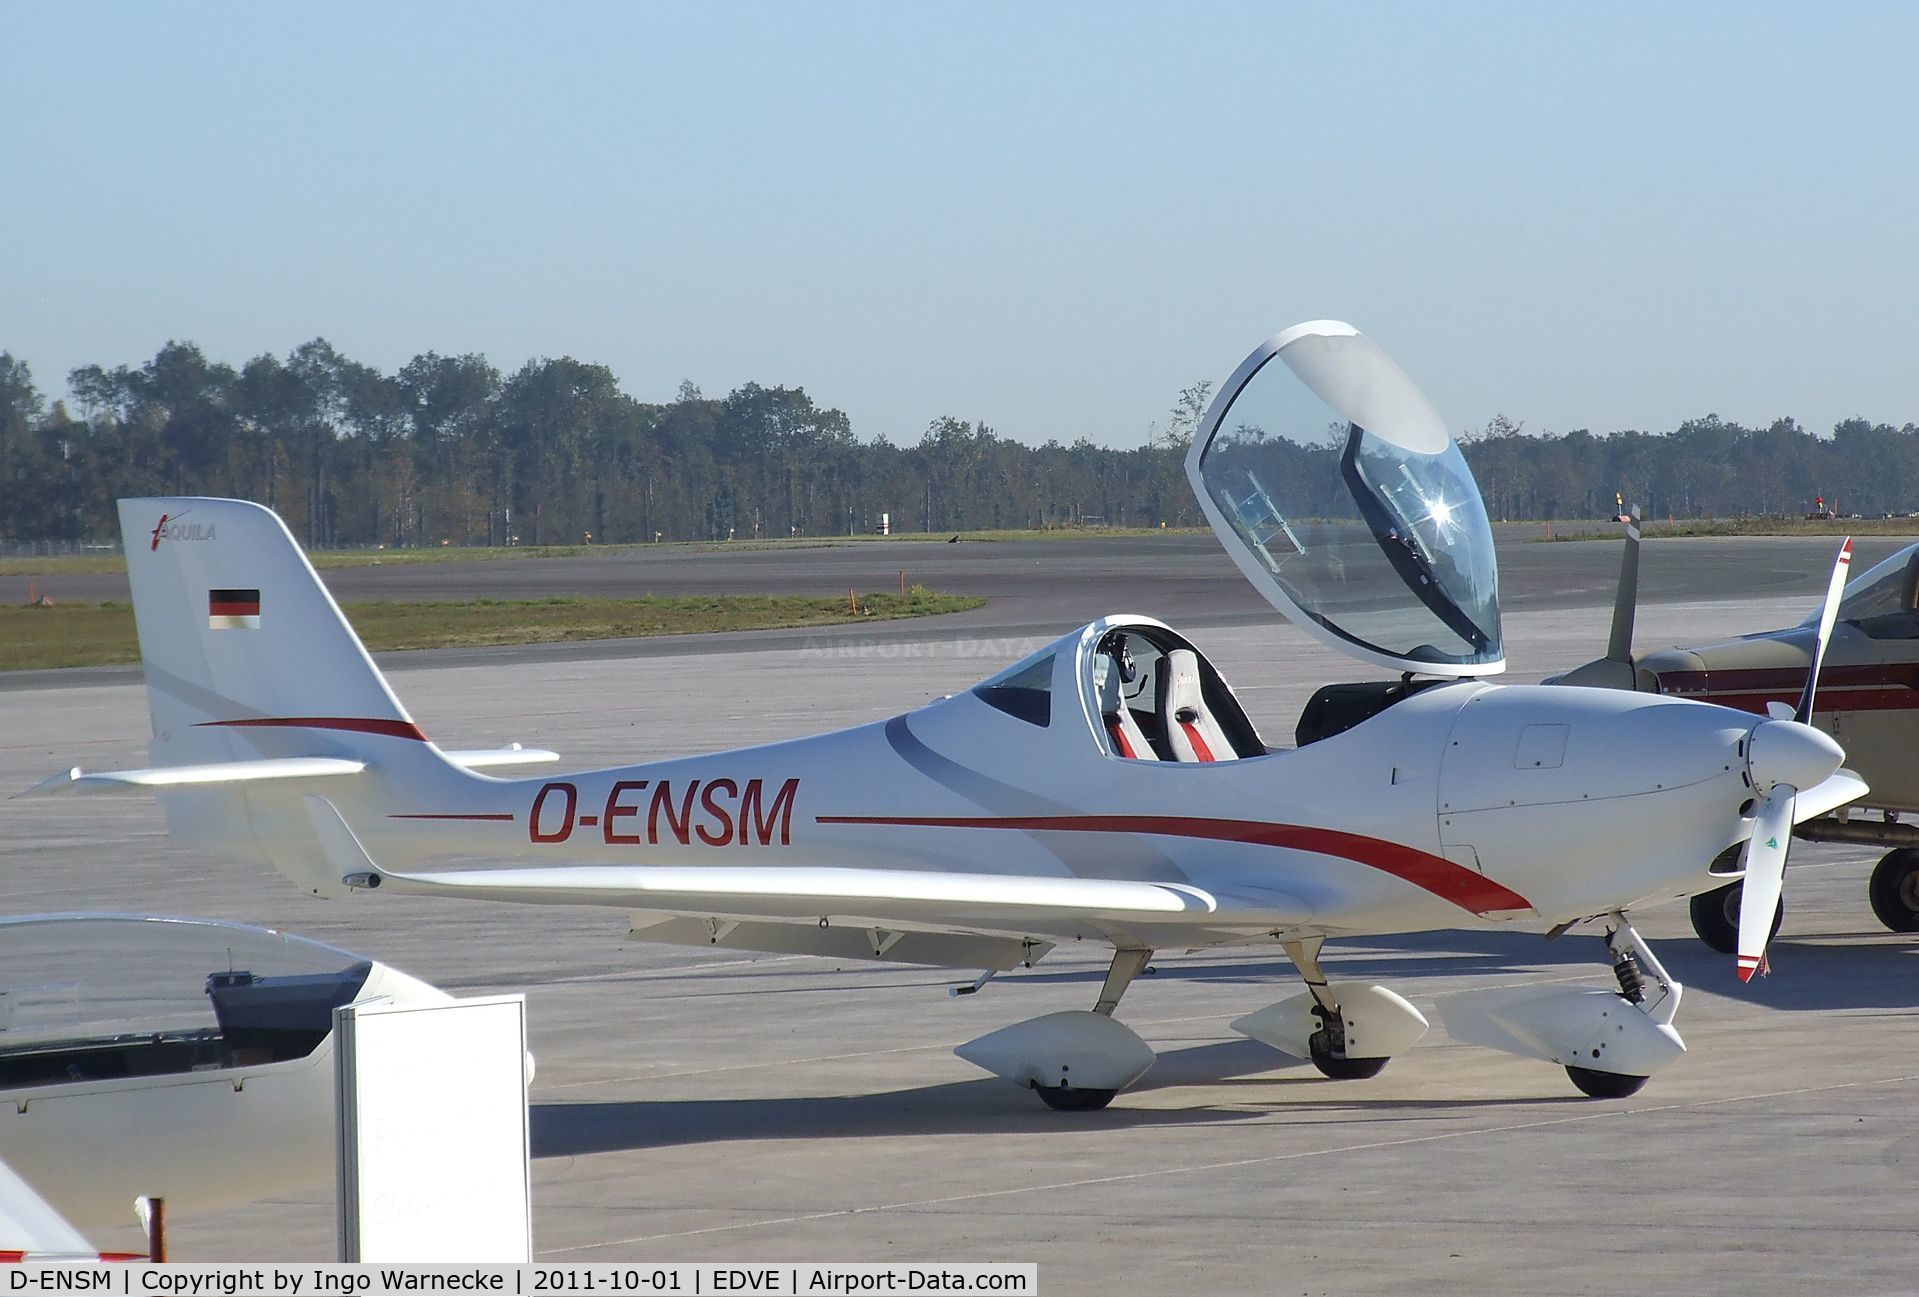 D-ENSM, Aquila A210 (AT01) C/N AT01-129, Aquila A210 (AT01) at Braunschweig-Waggum airport